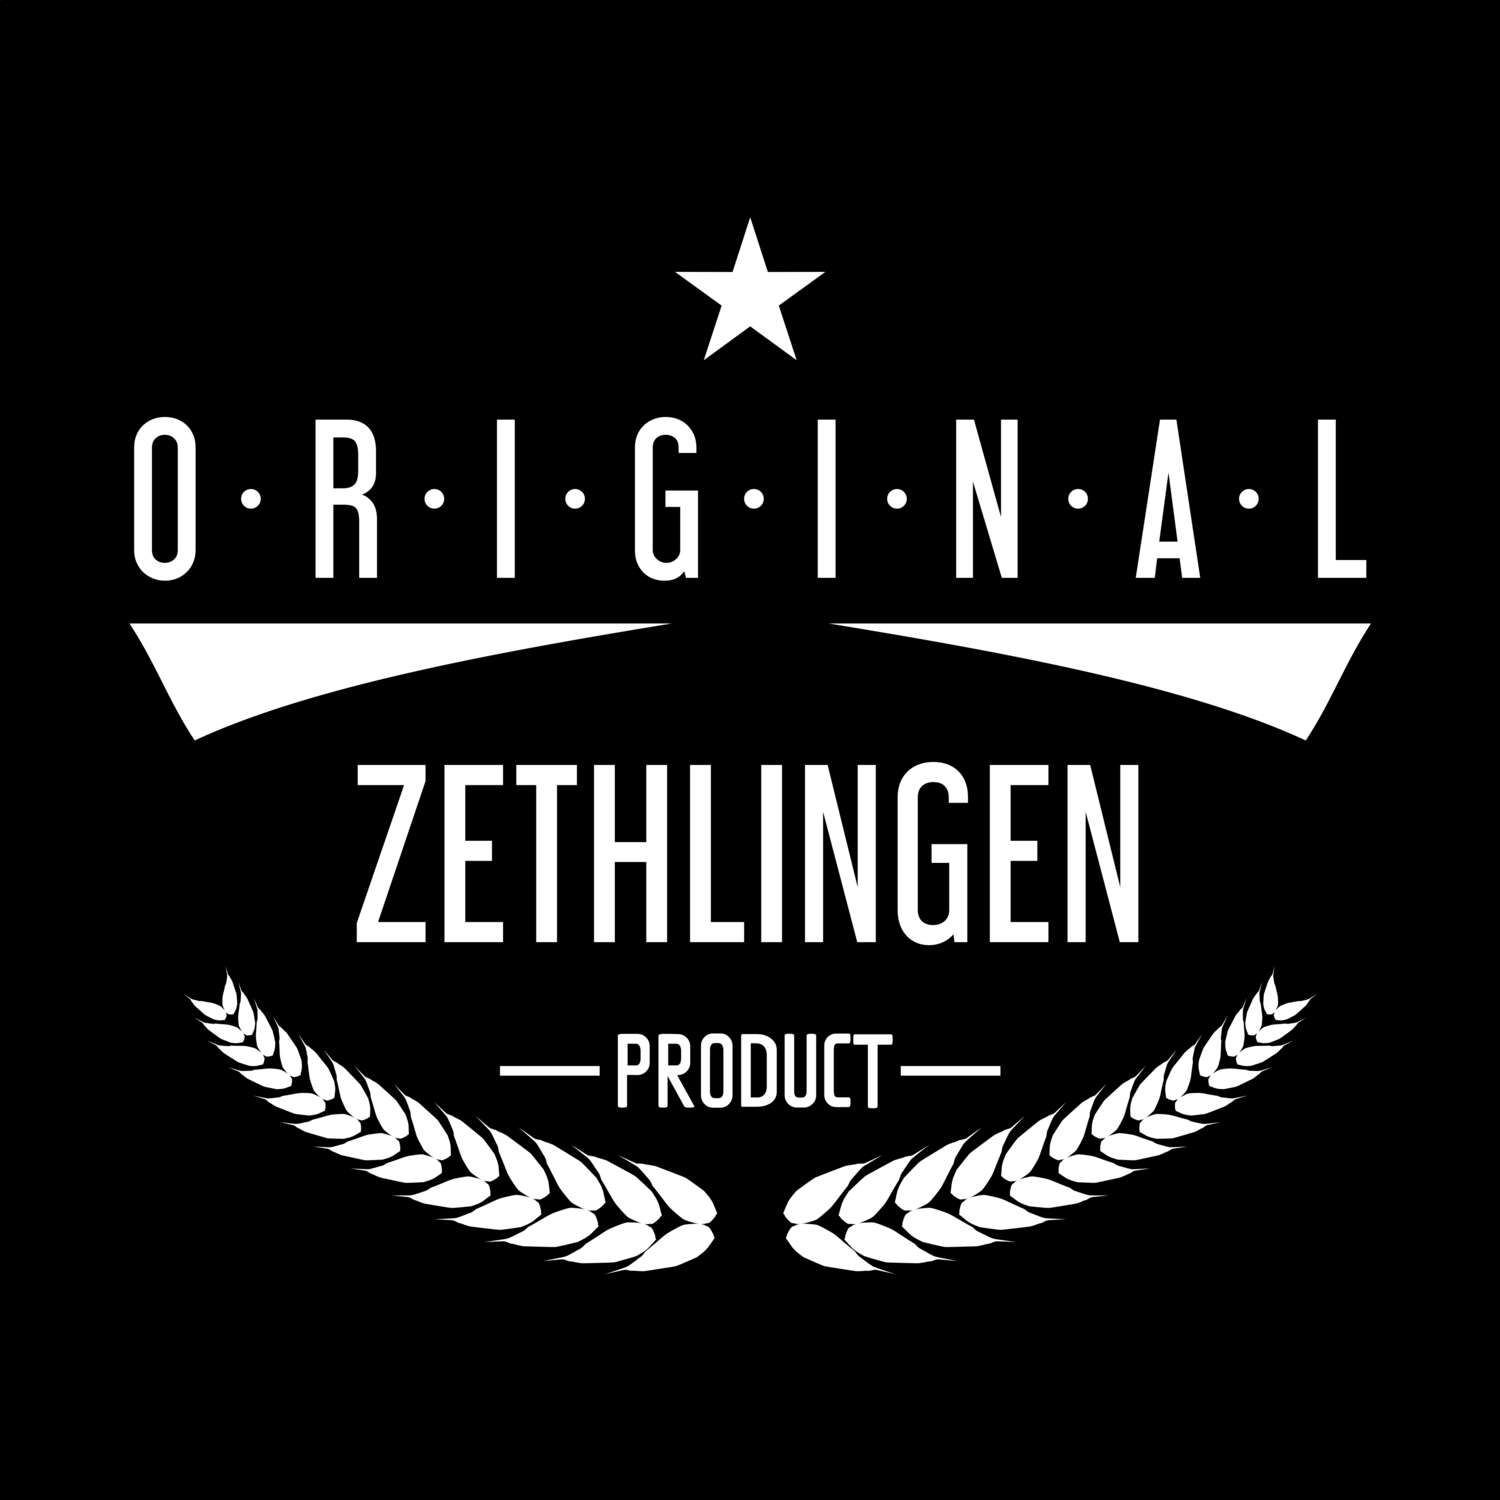 Zethlingen T-Shirt »Original Product«